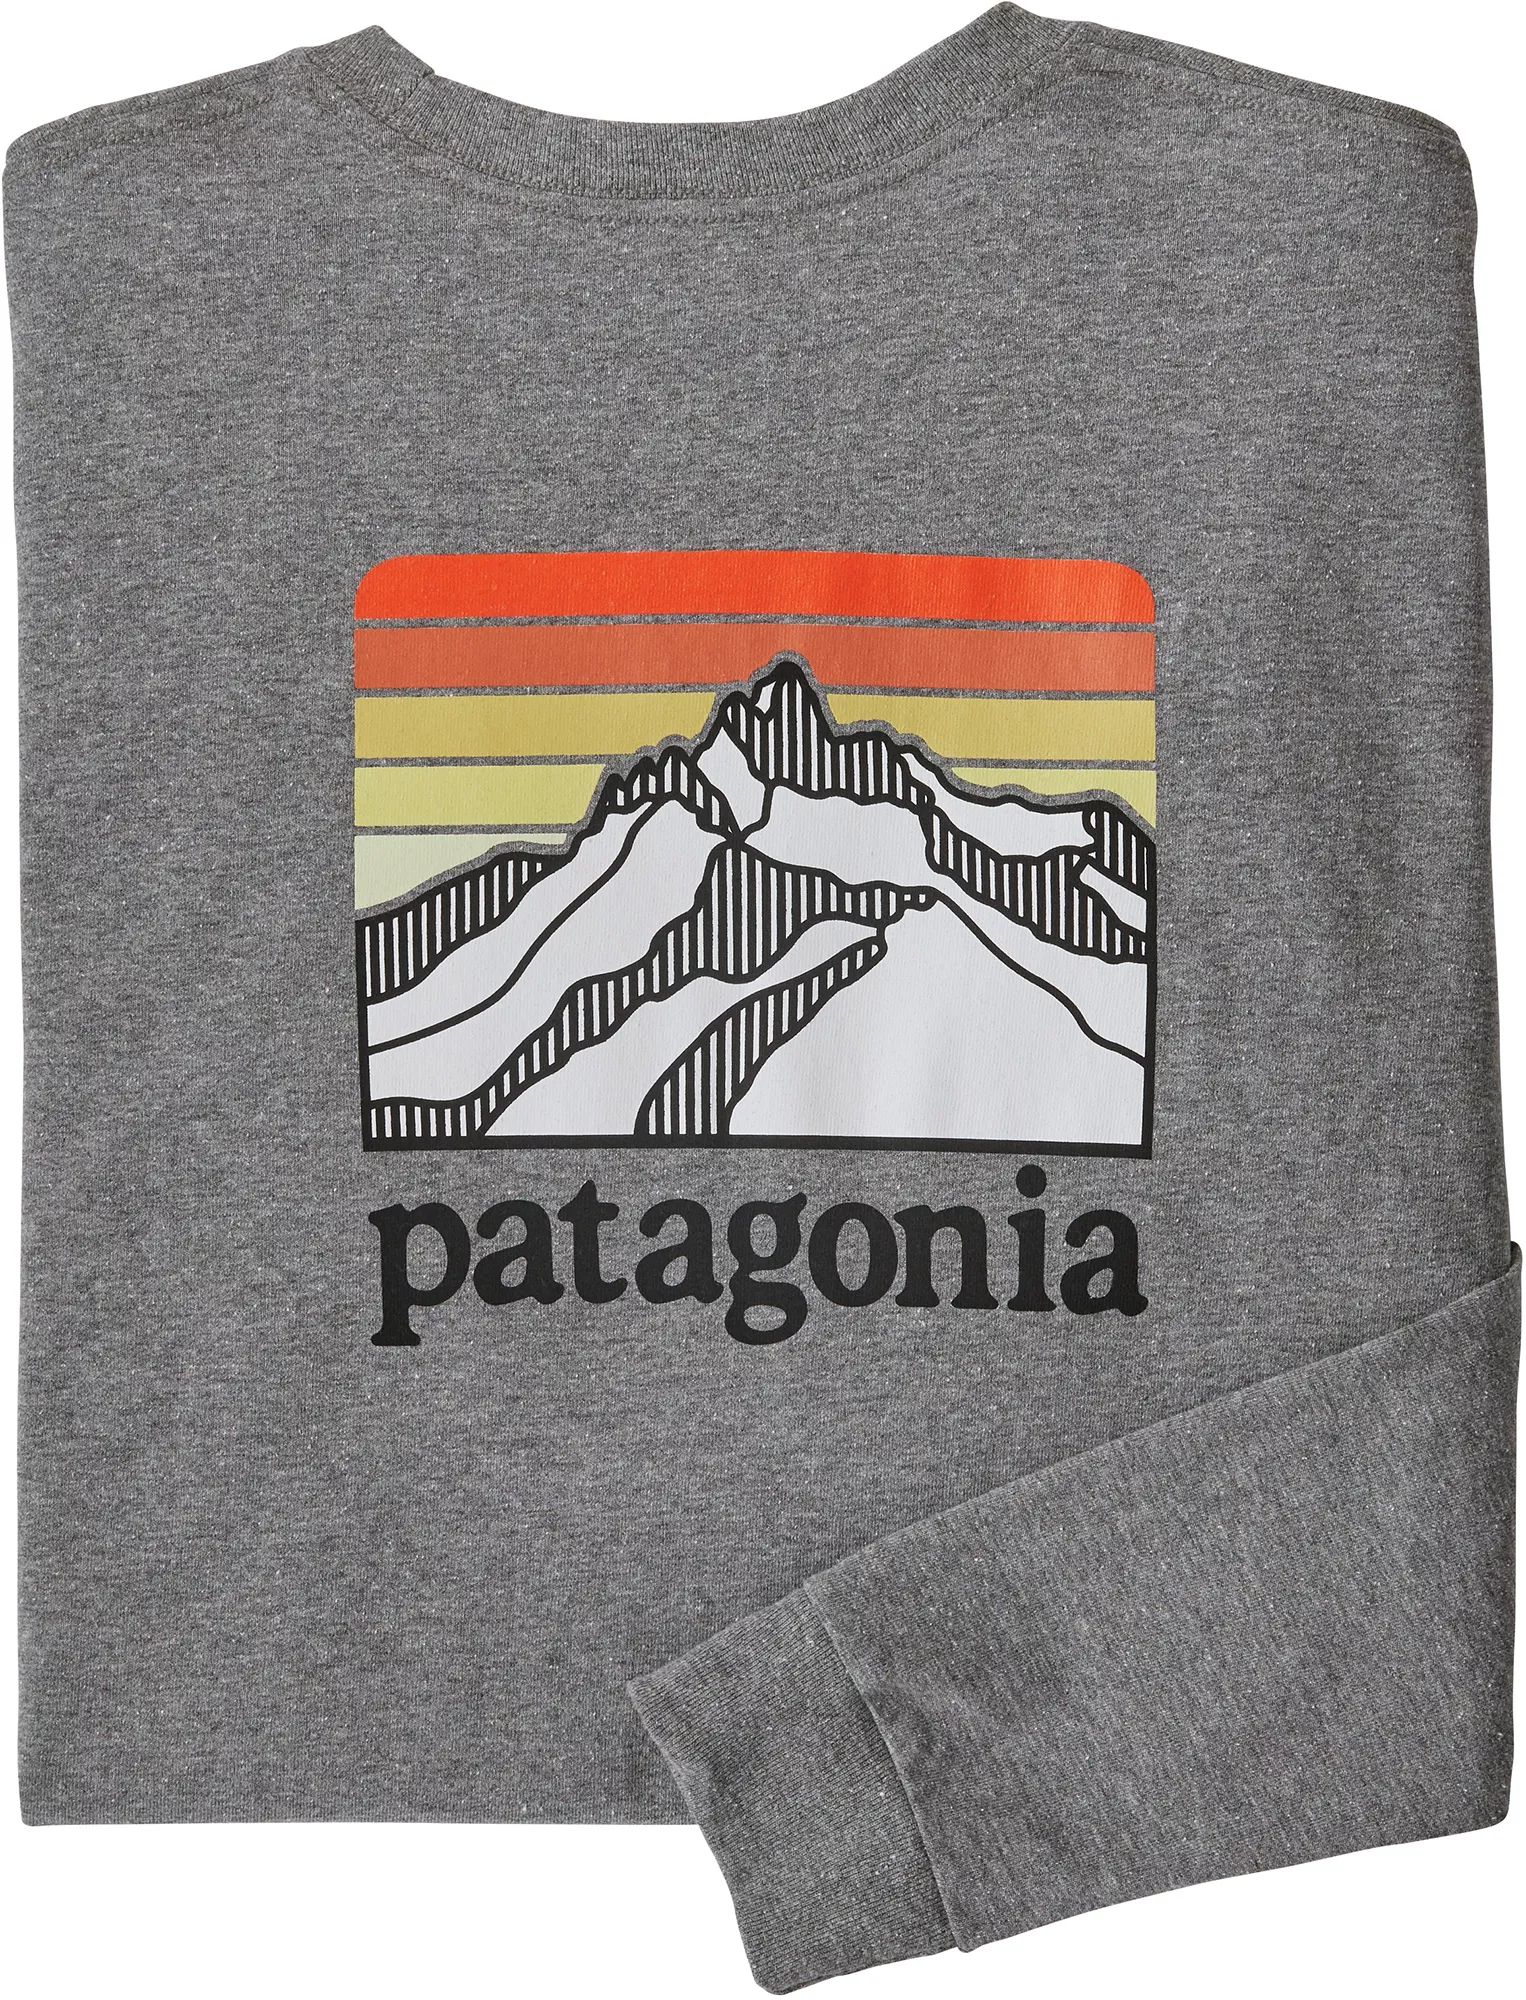 Patagonia Men's Line Logo Ridge Responsbilit-Tee Long Sleeve T-Shirt, Small, Gravel Heather | Dick's Sporting Goods